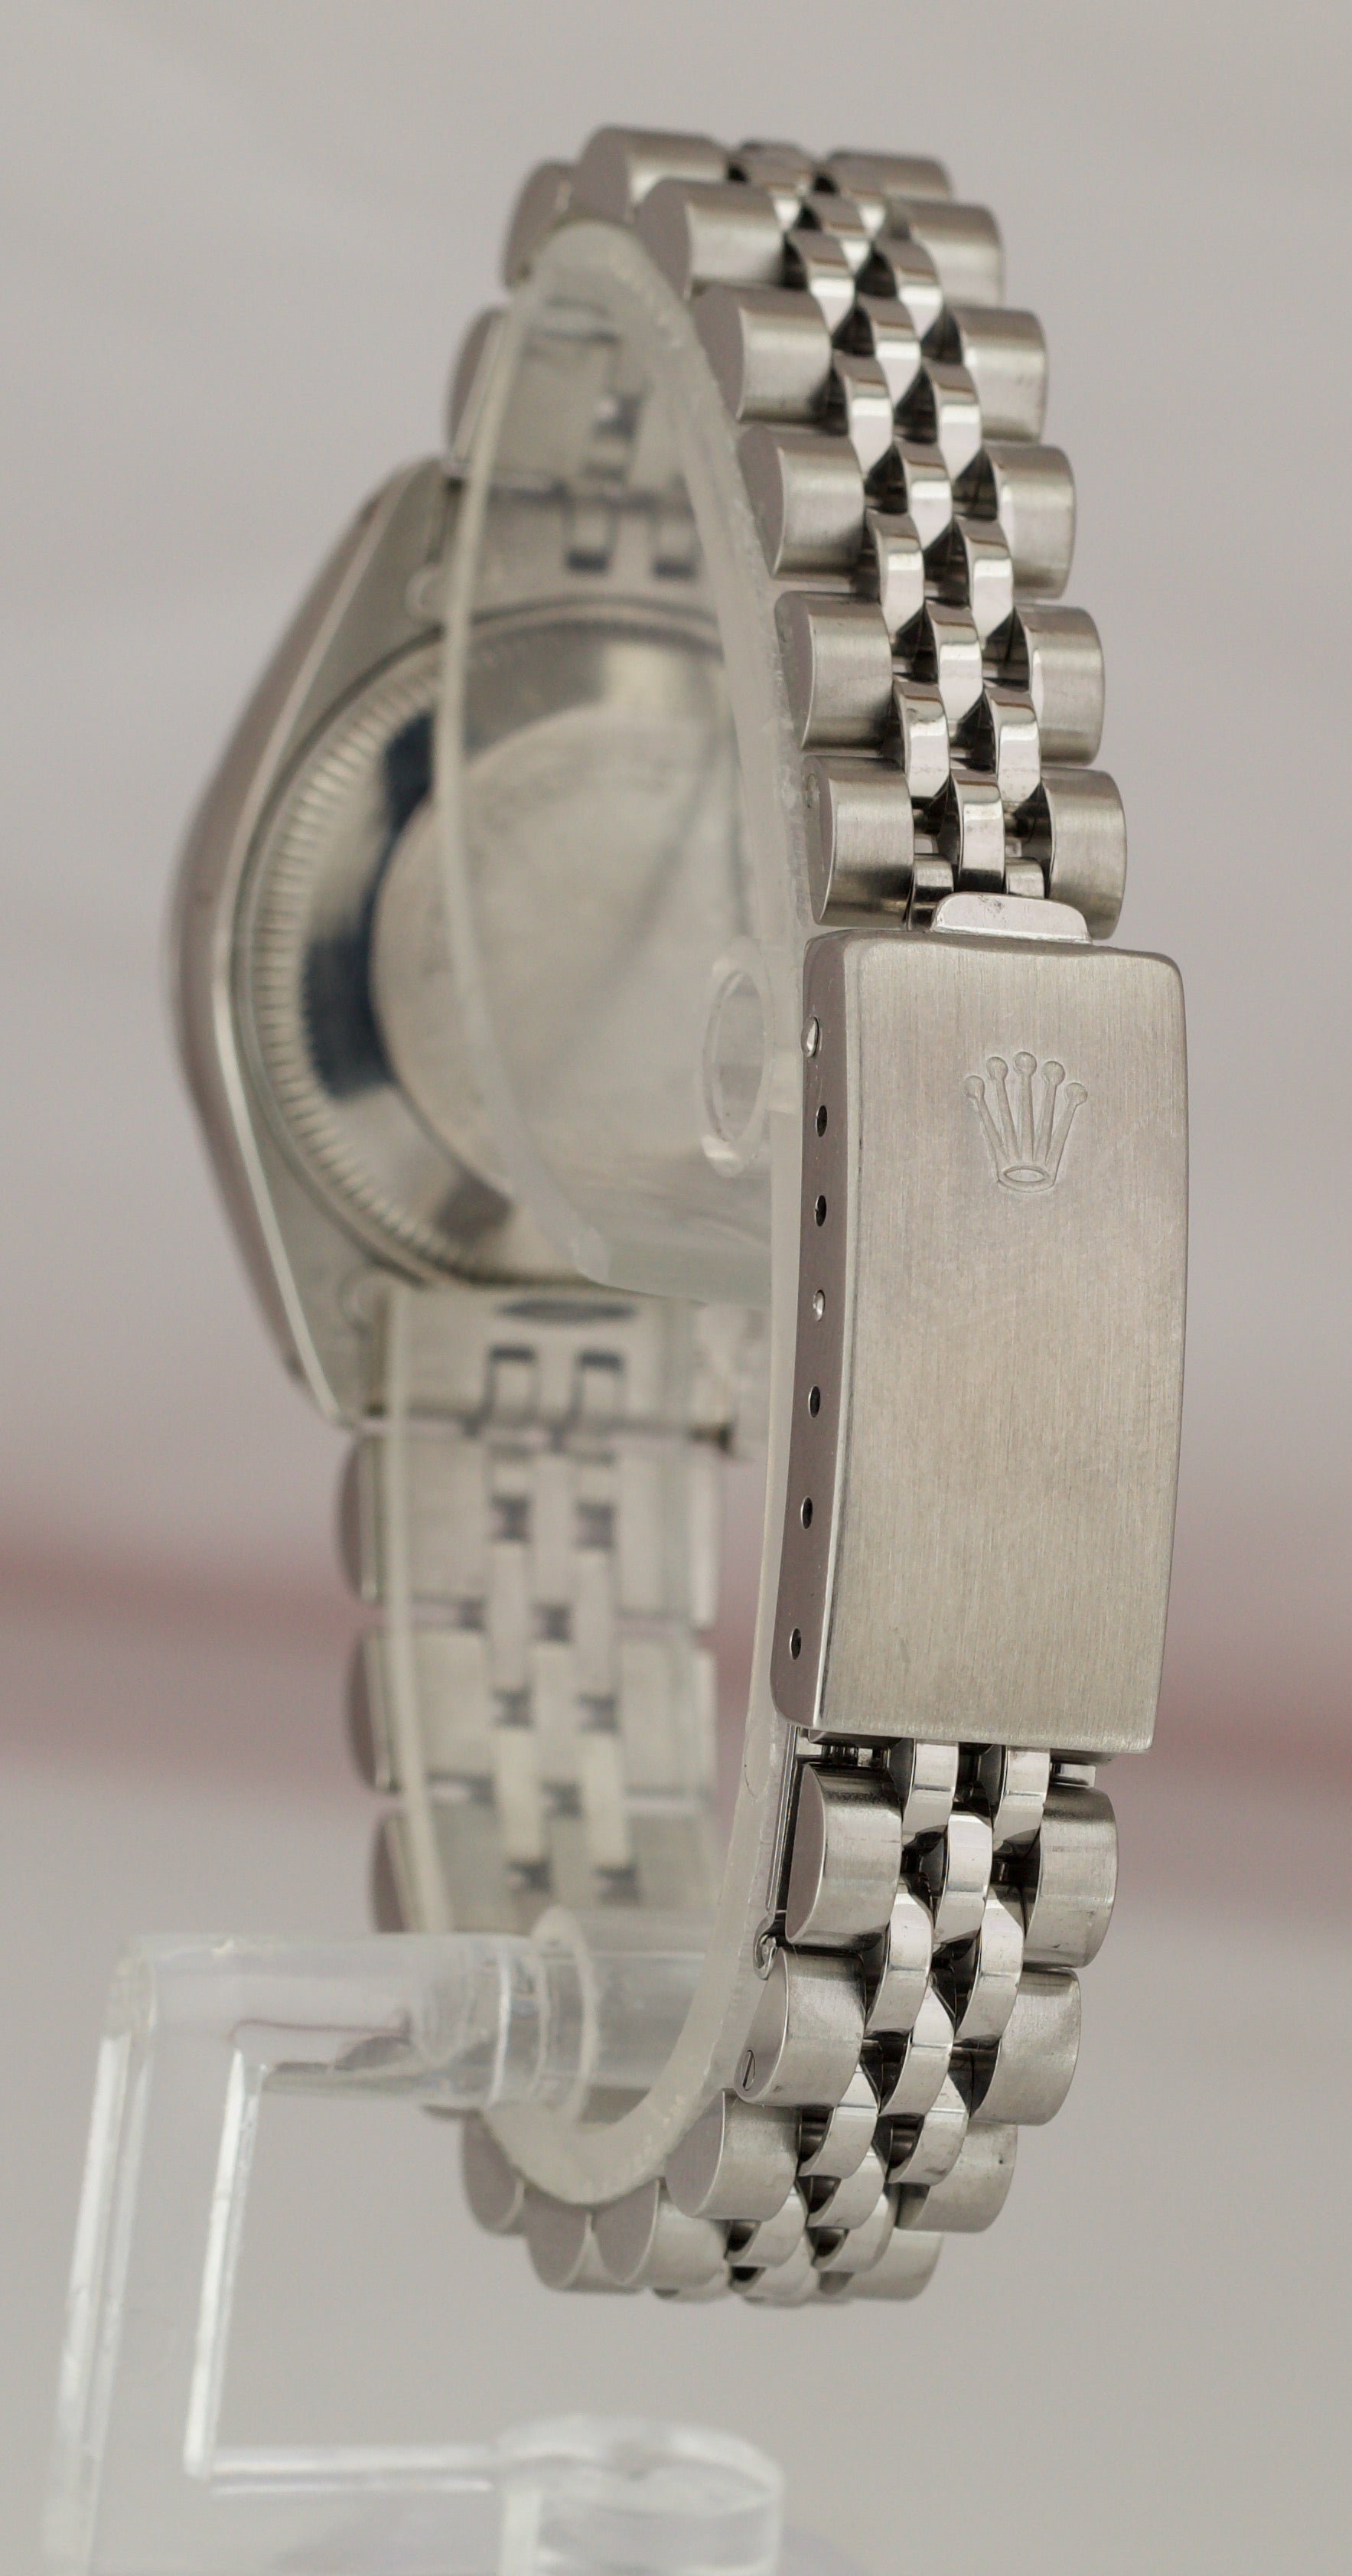 Ladies Rolex Date Silver Stick 26mm Stainless Steel Watch Swiss DateJust 6916